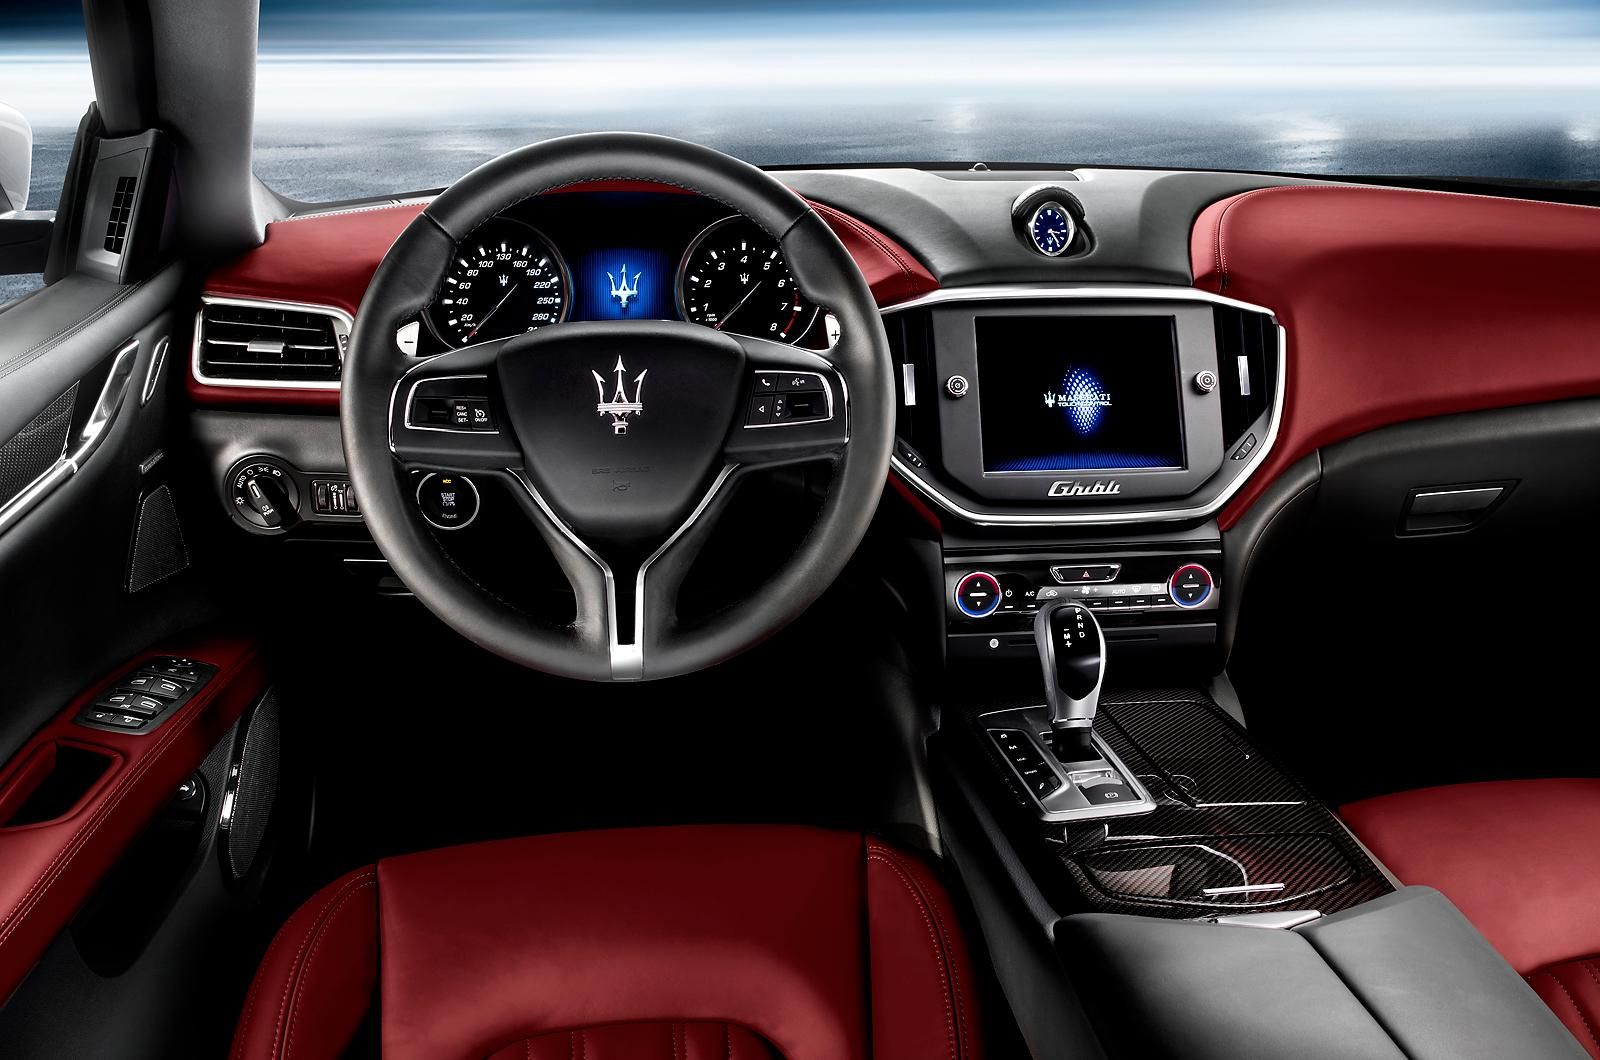 2014-Maserati-Ghibli-dashboard1